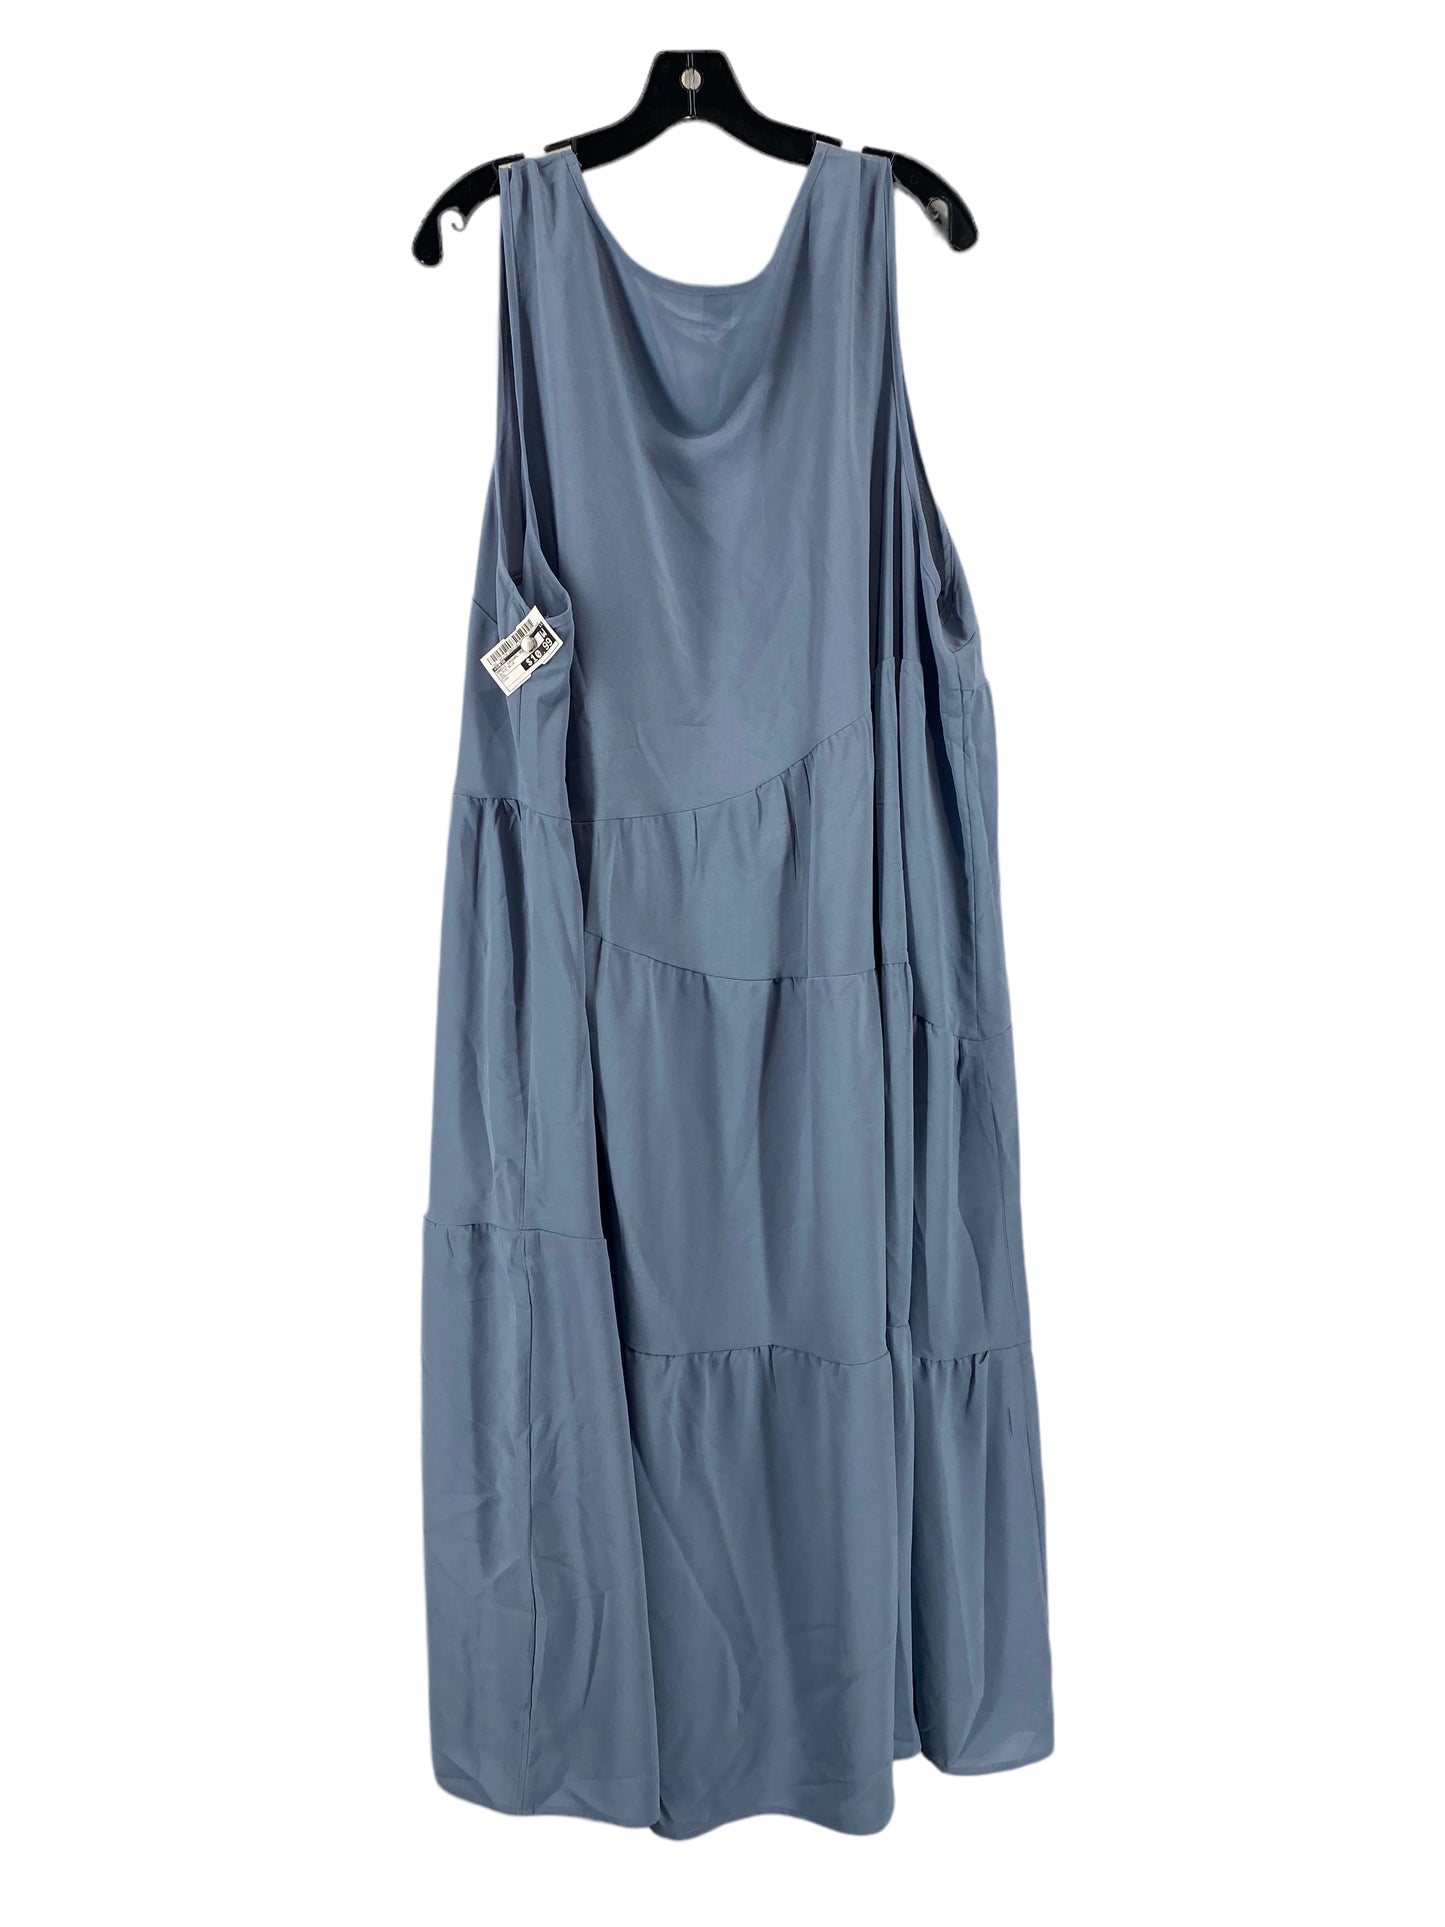 Dress Casual Midi By Shein